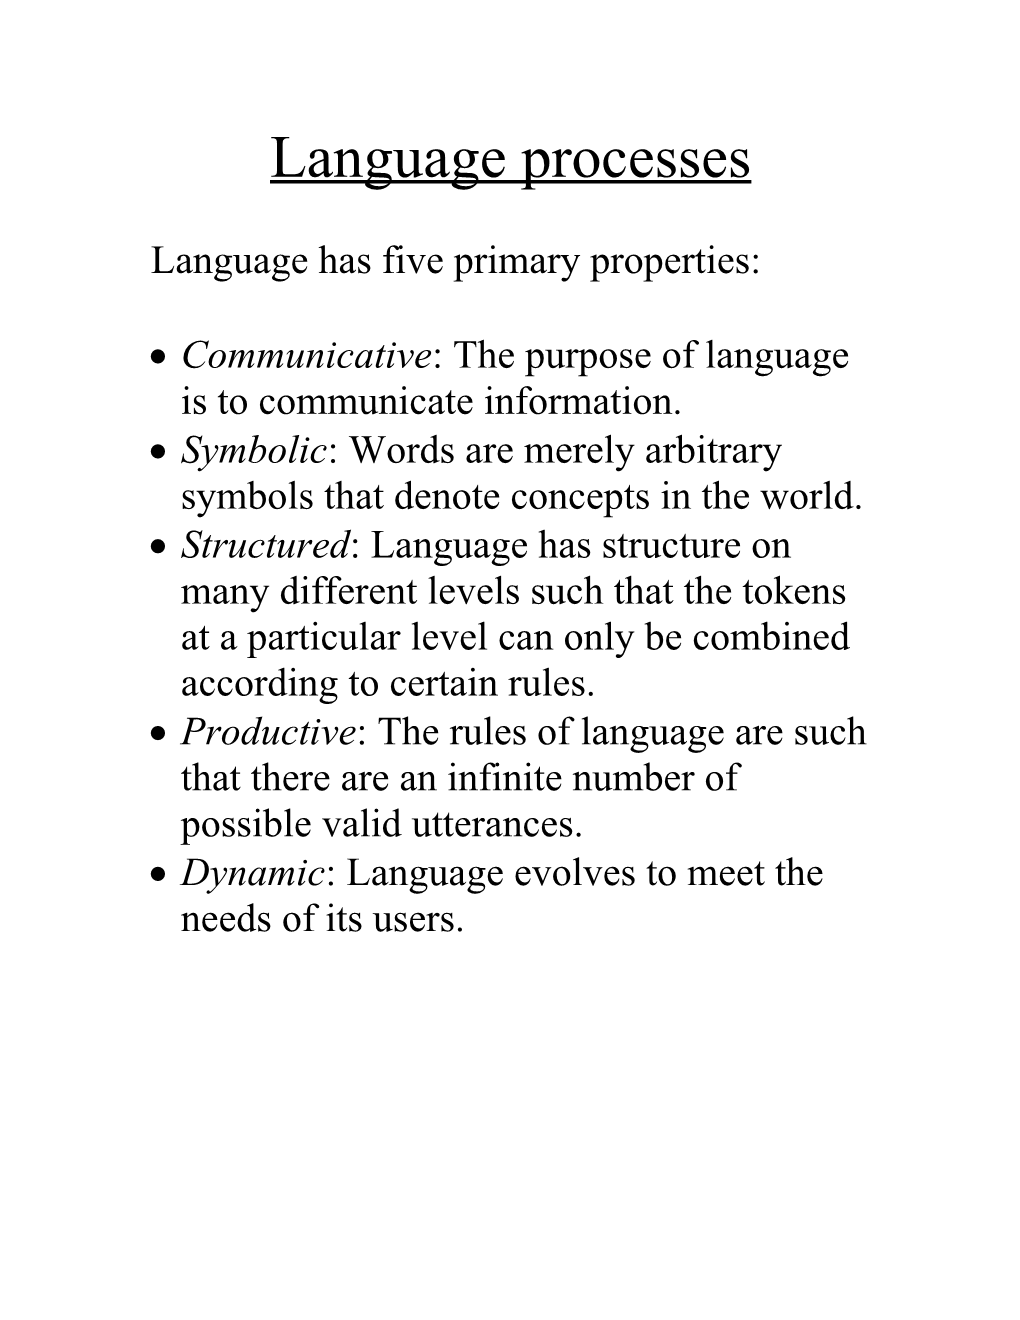 Language Has Five Primary Properties